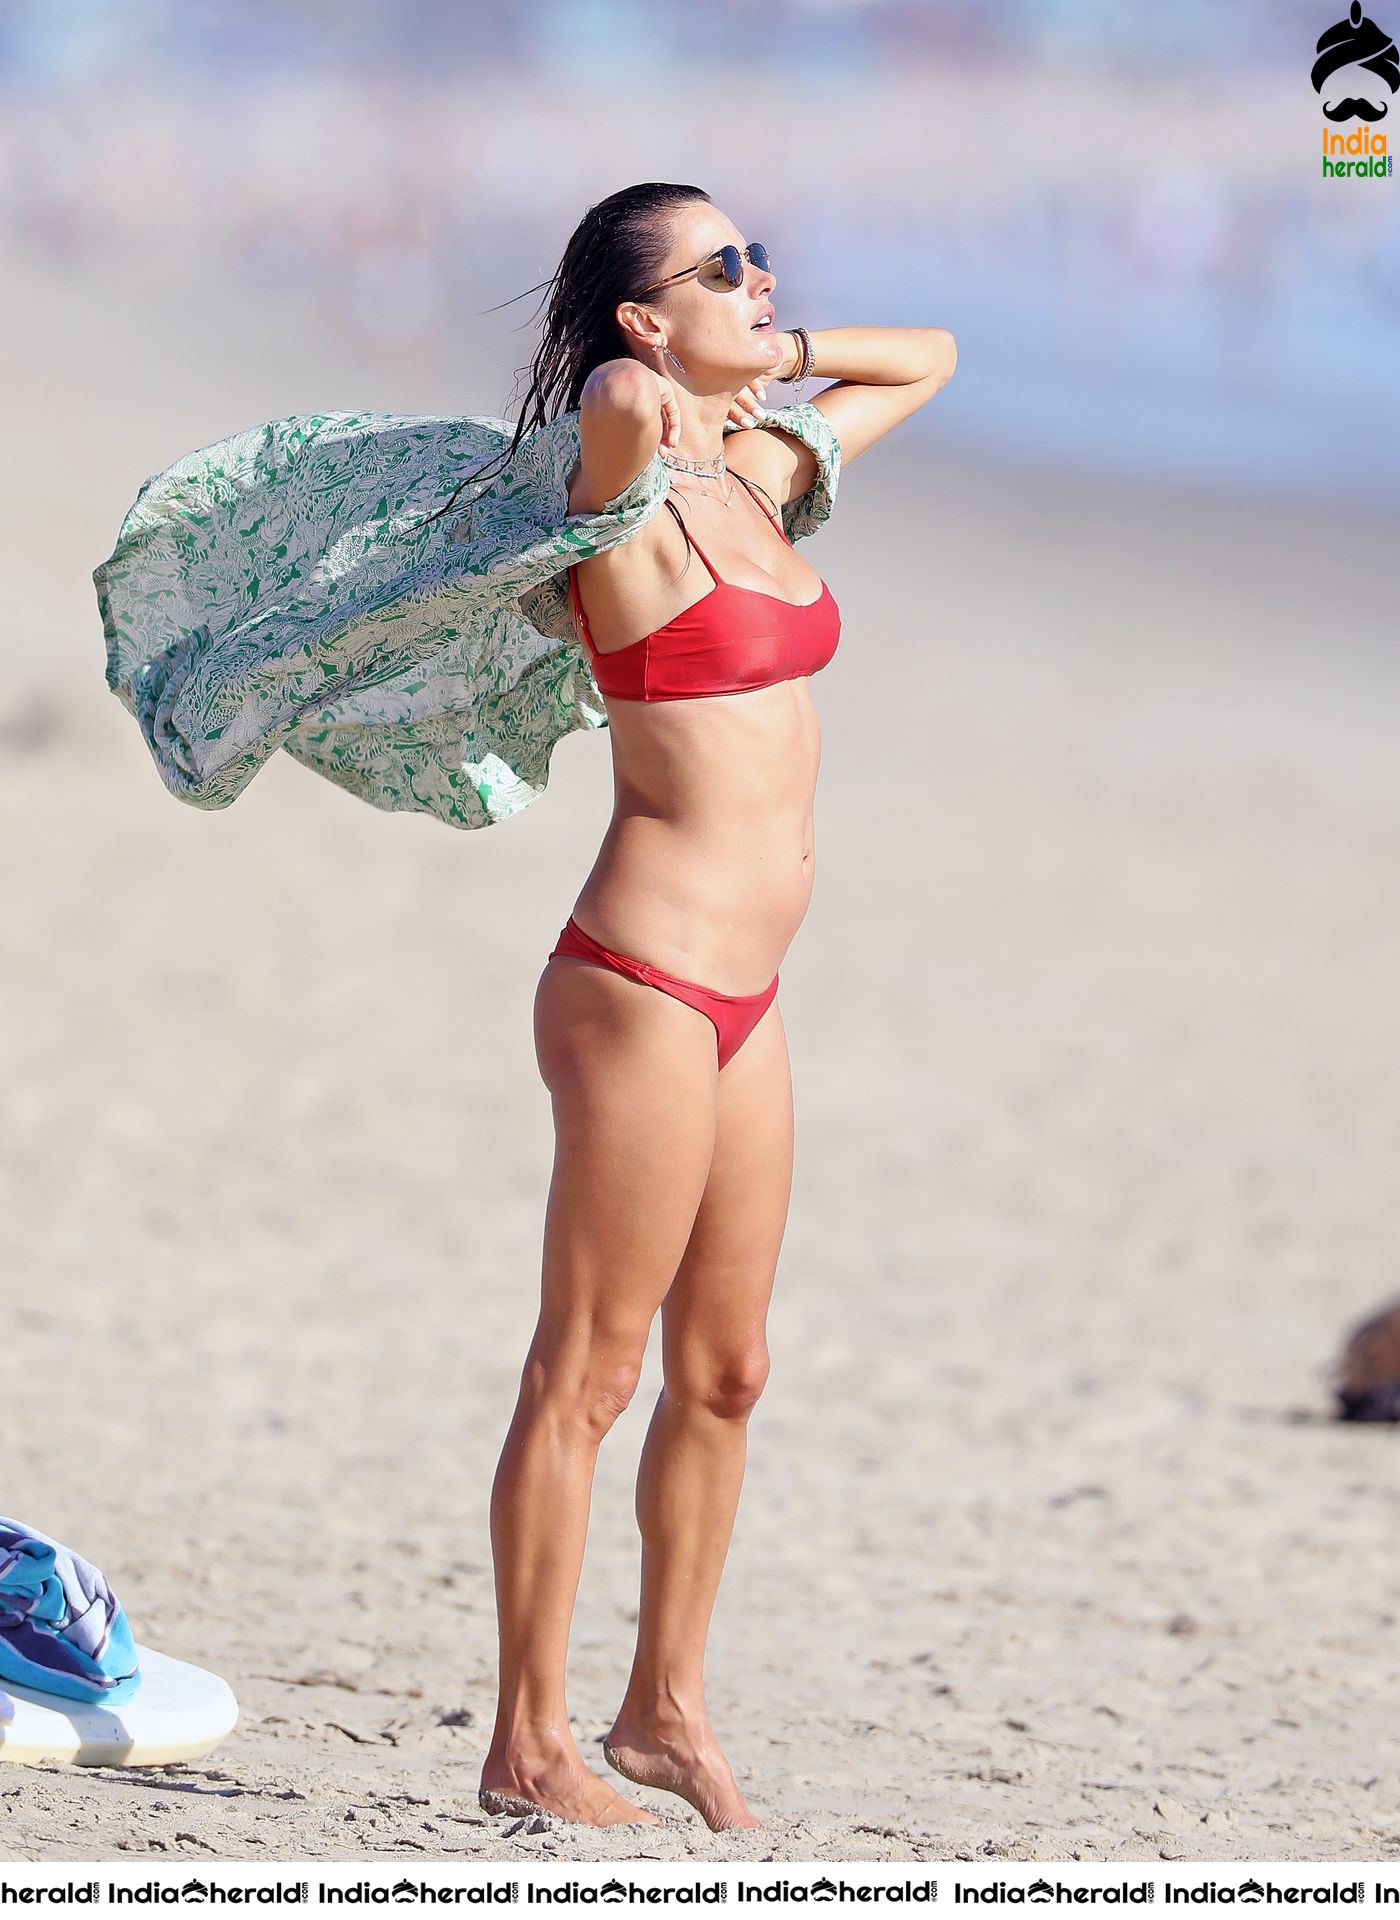 Alessandra Ambrosio Exposes her Hot Body in String Bikini as she takes bath in Beach Set 2